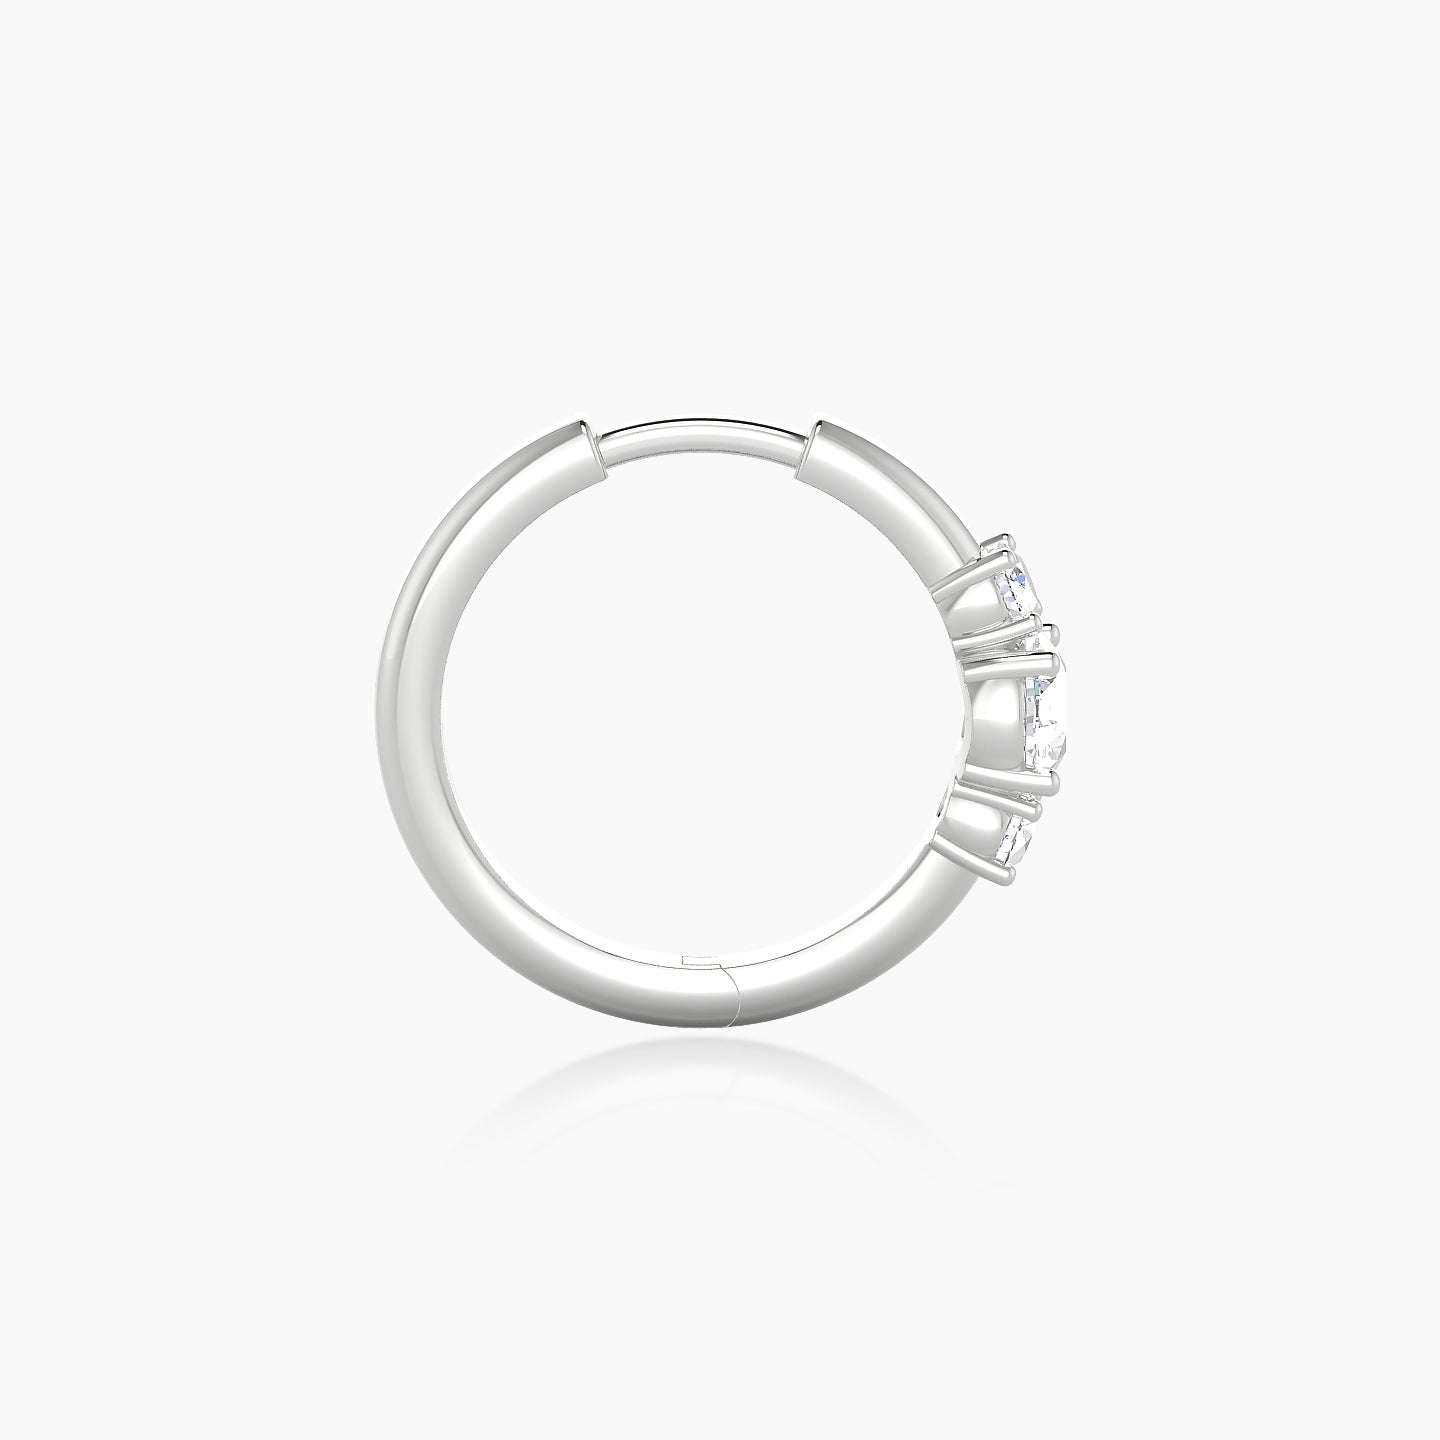 Grace | 18k White Gold 9.5 mm Trilogy Round Diamond Nose Ring Piercing